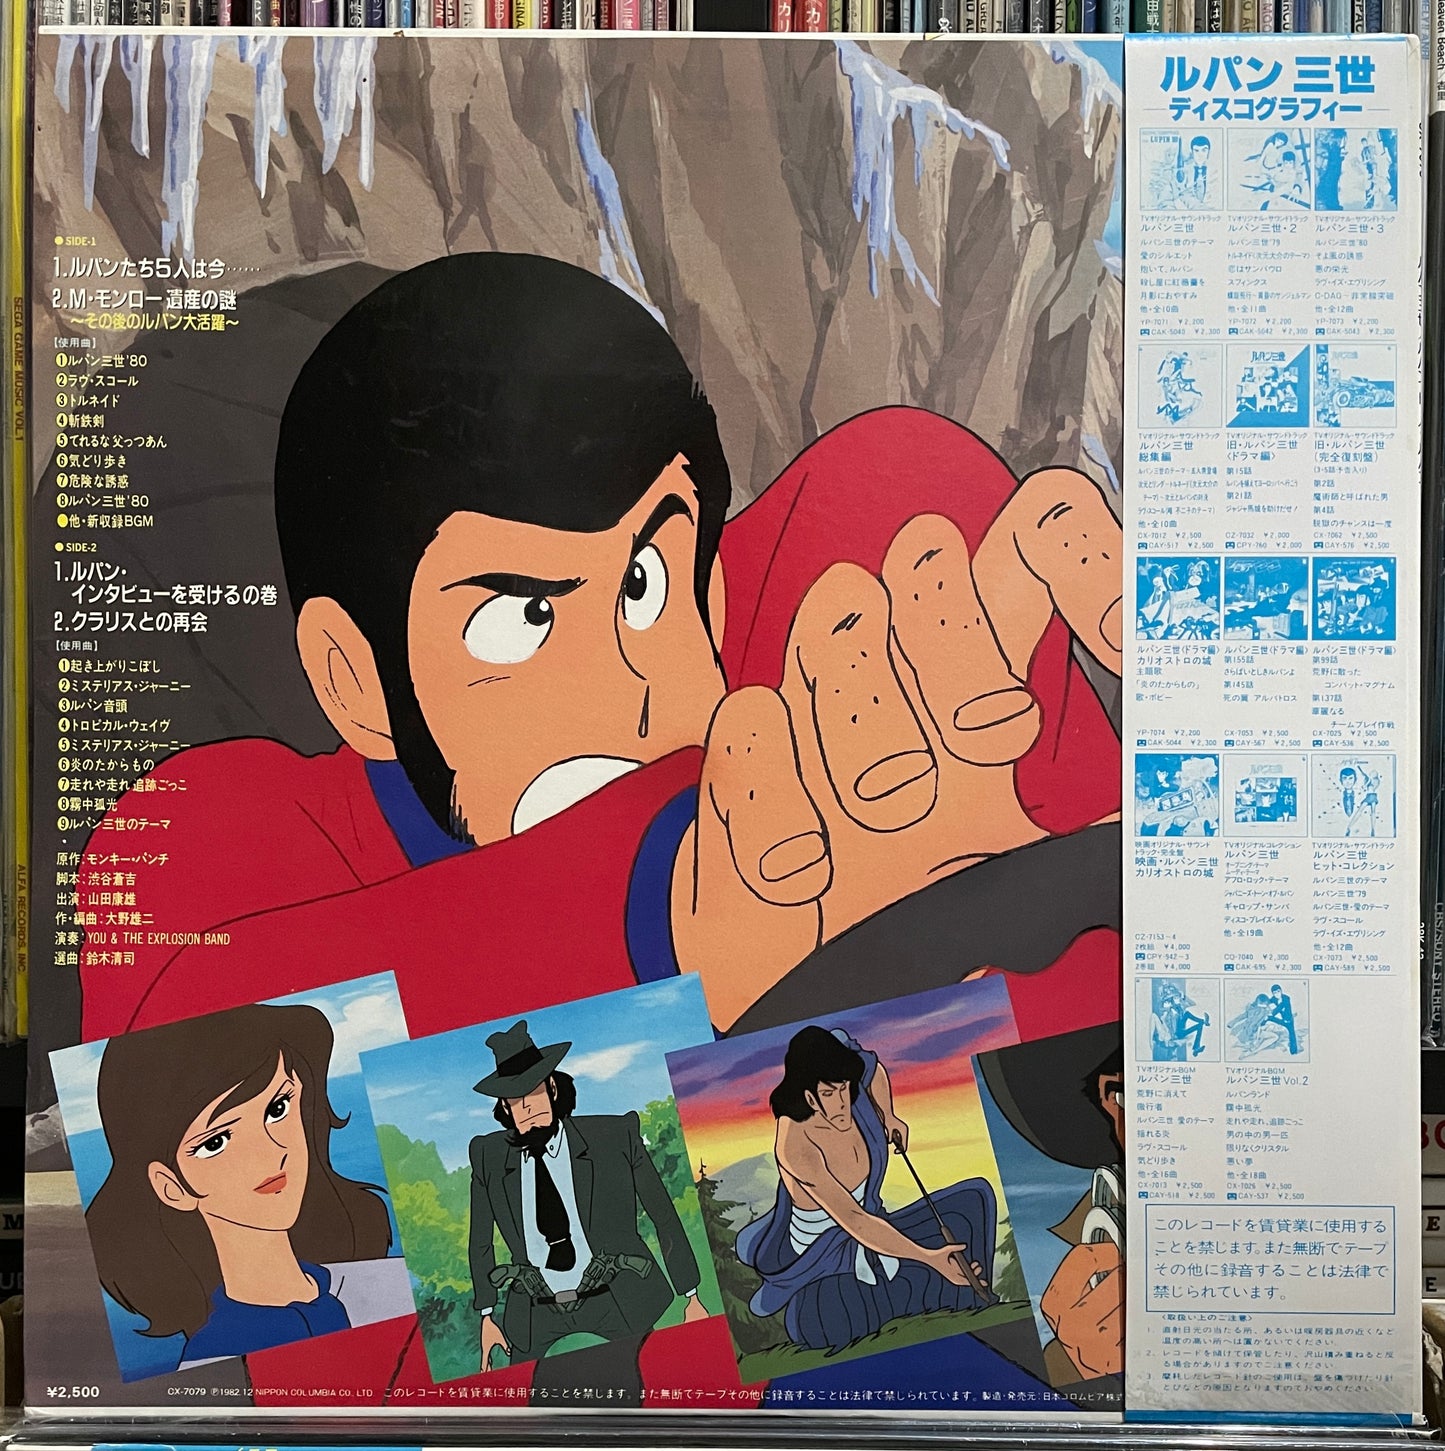 Yuji Ohno (You & The Explosion Band) “Lupin The 3rd - Talks Lupin” (1982)